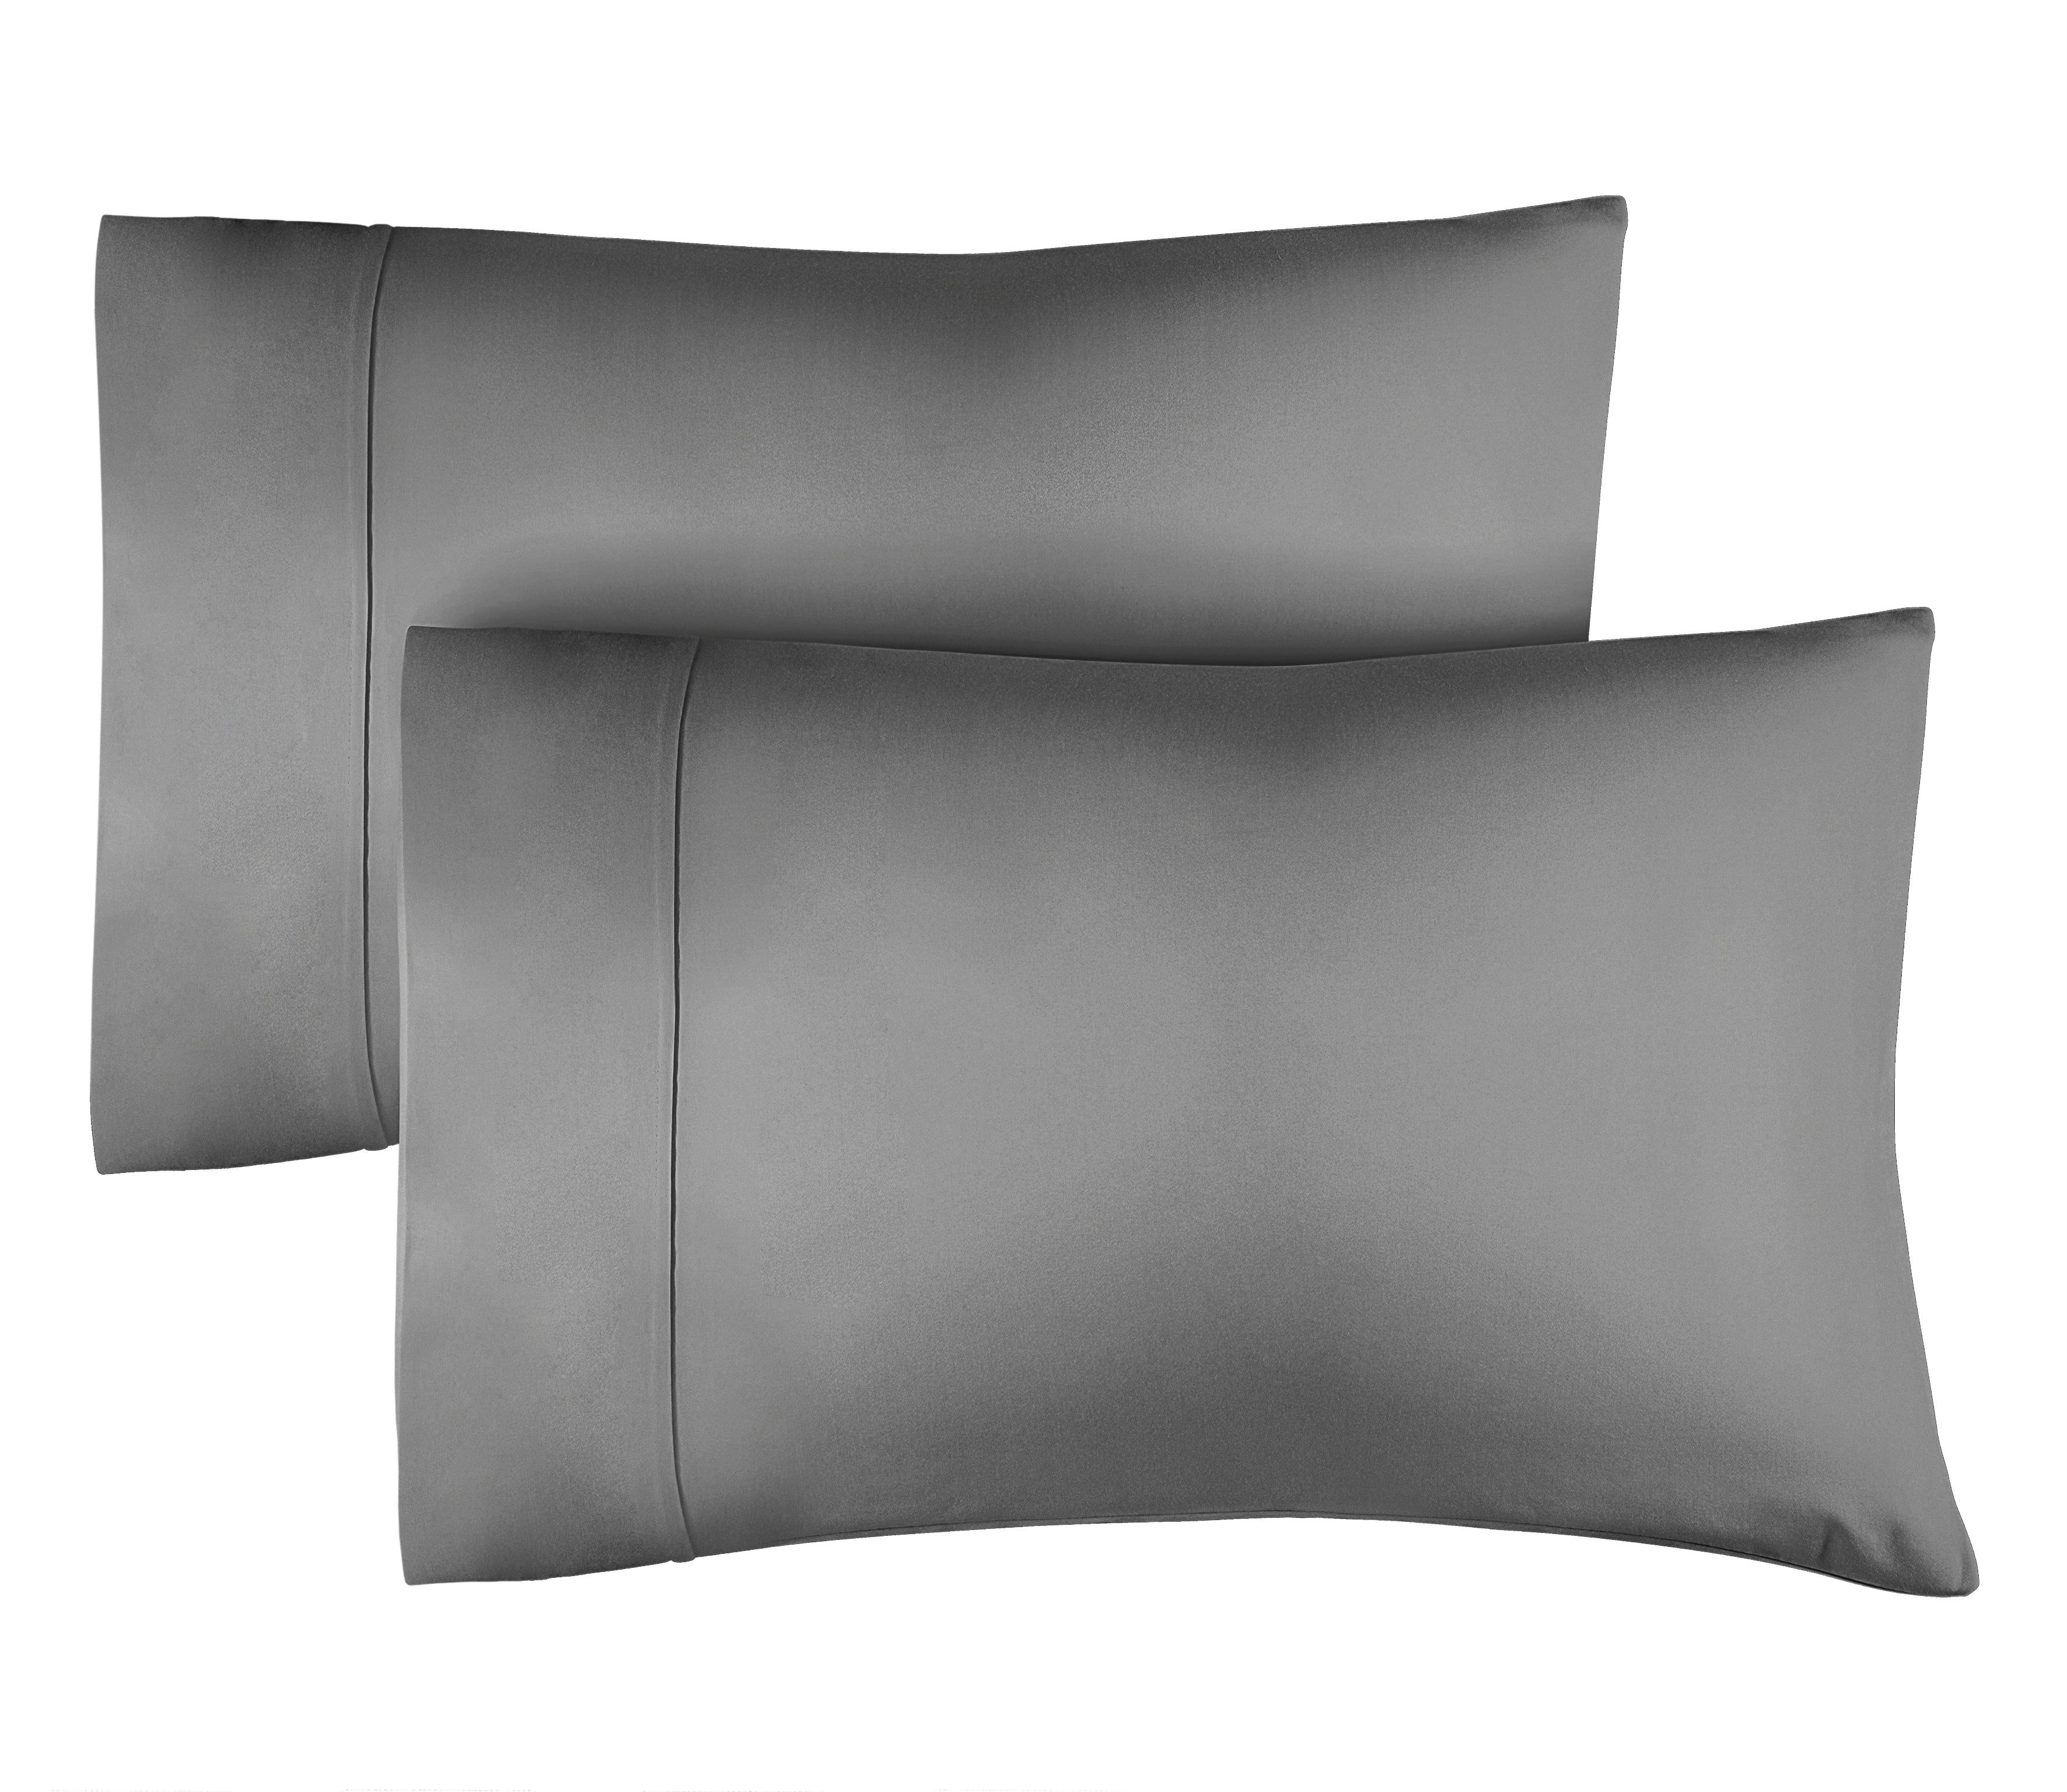 Basics 400 Thread Count Cotton Pillow Case, Standard, Set of 2, 30  L x 20 W, Smoke Blue